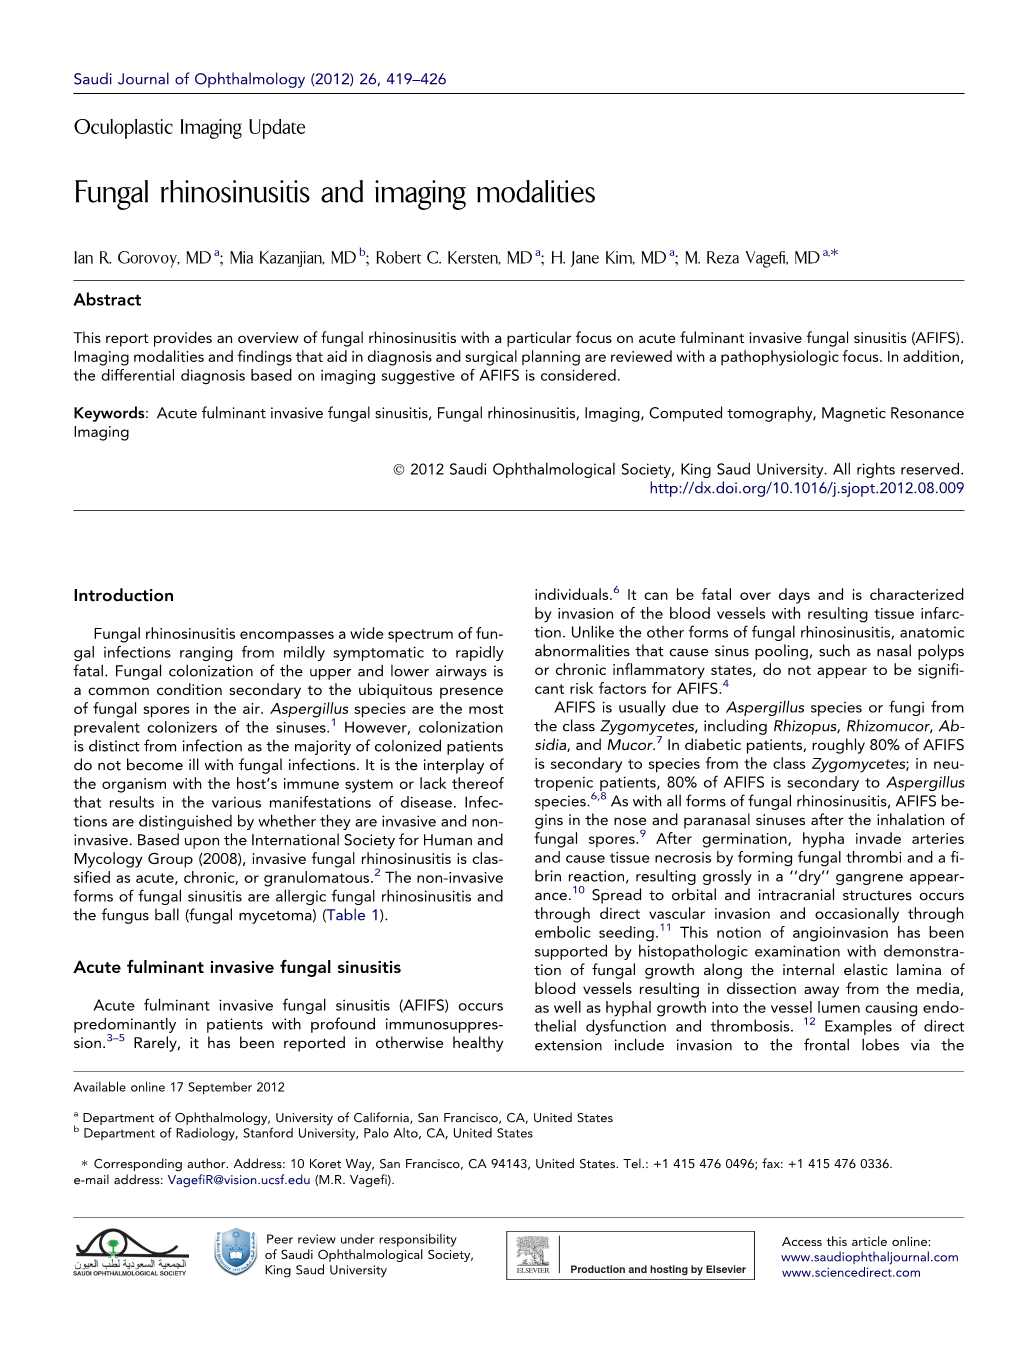 Fungal Rhinosinusitis and Imaging Modalities